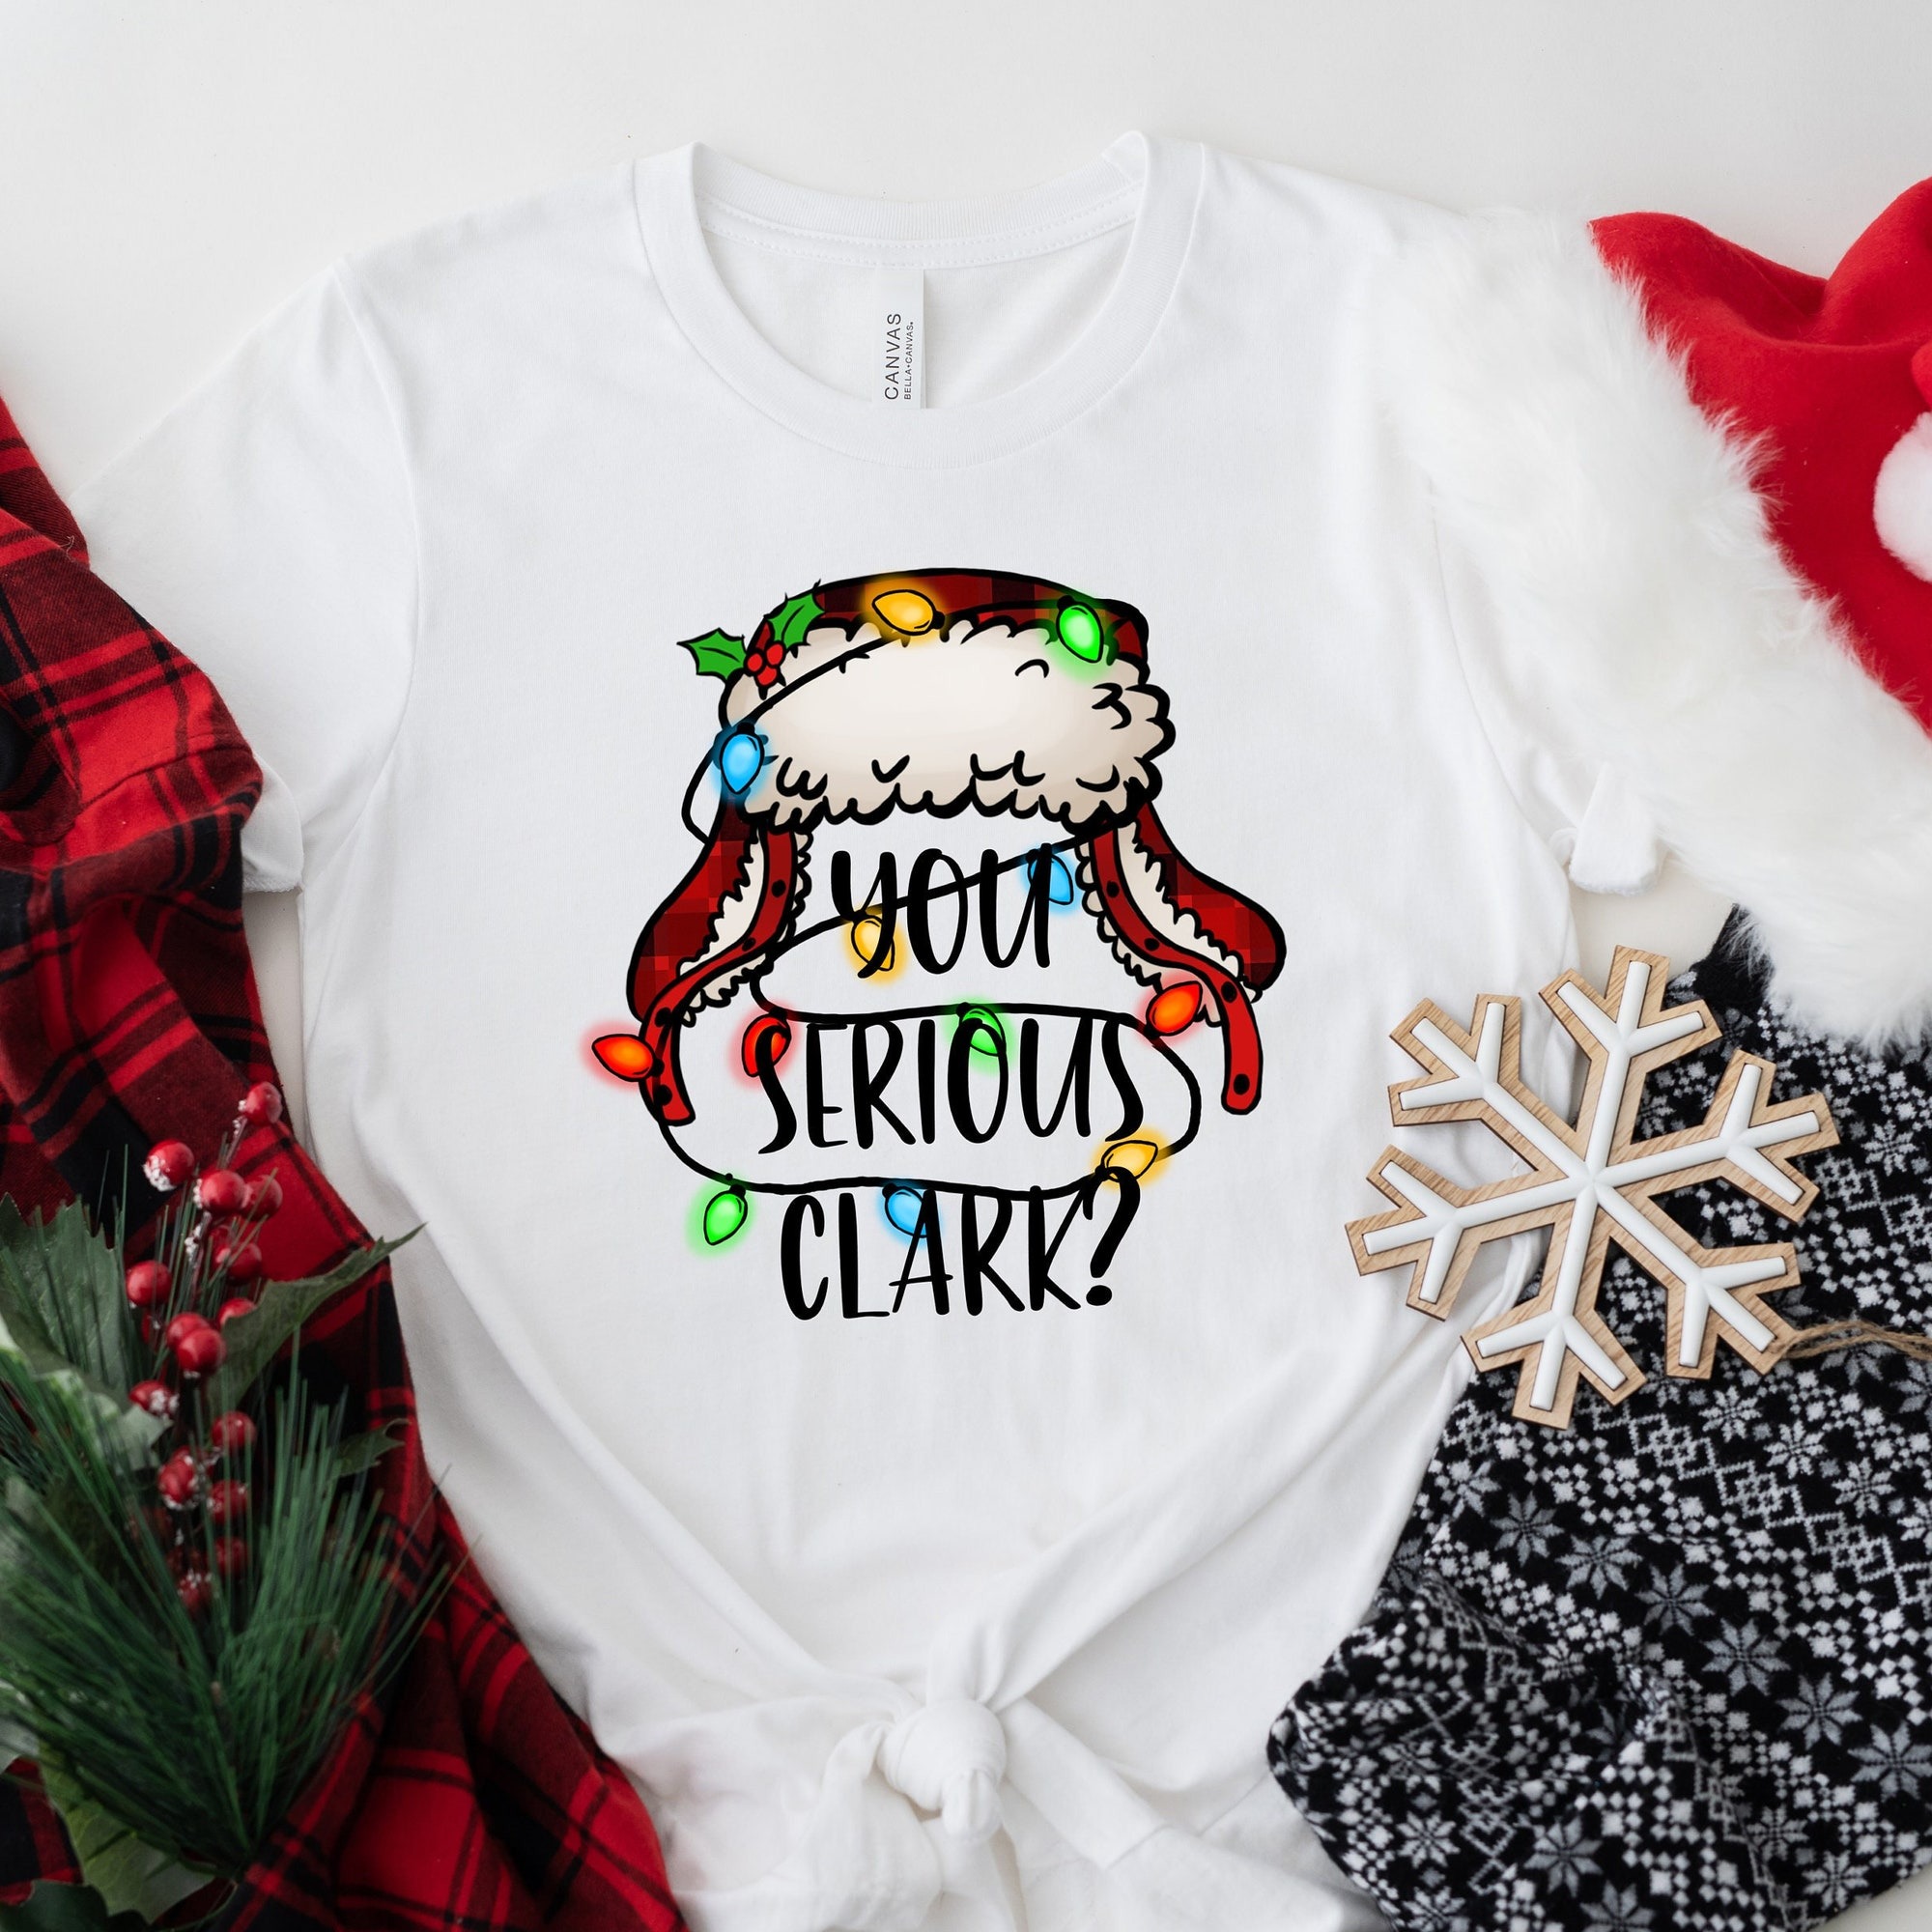 You Serious Clark Shirt, Christmas Family Shirt, Christmas Gift, Christmas Shirt, Holiday Shirt, Christmas Shirt, Family Christmas Shirt